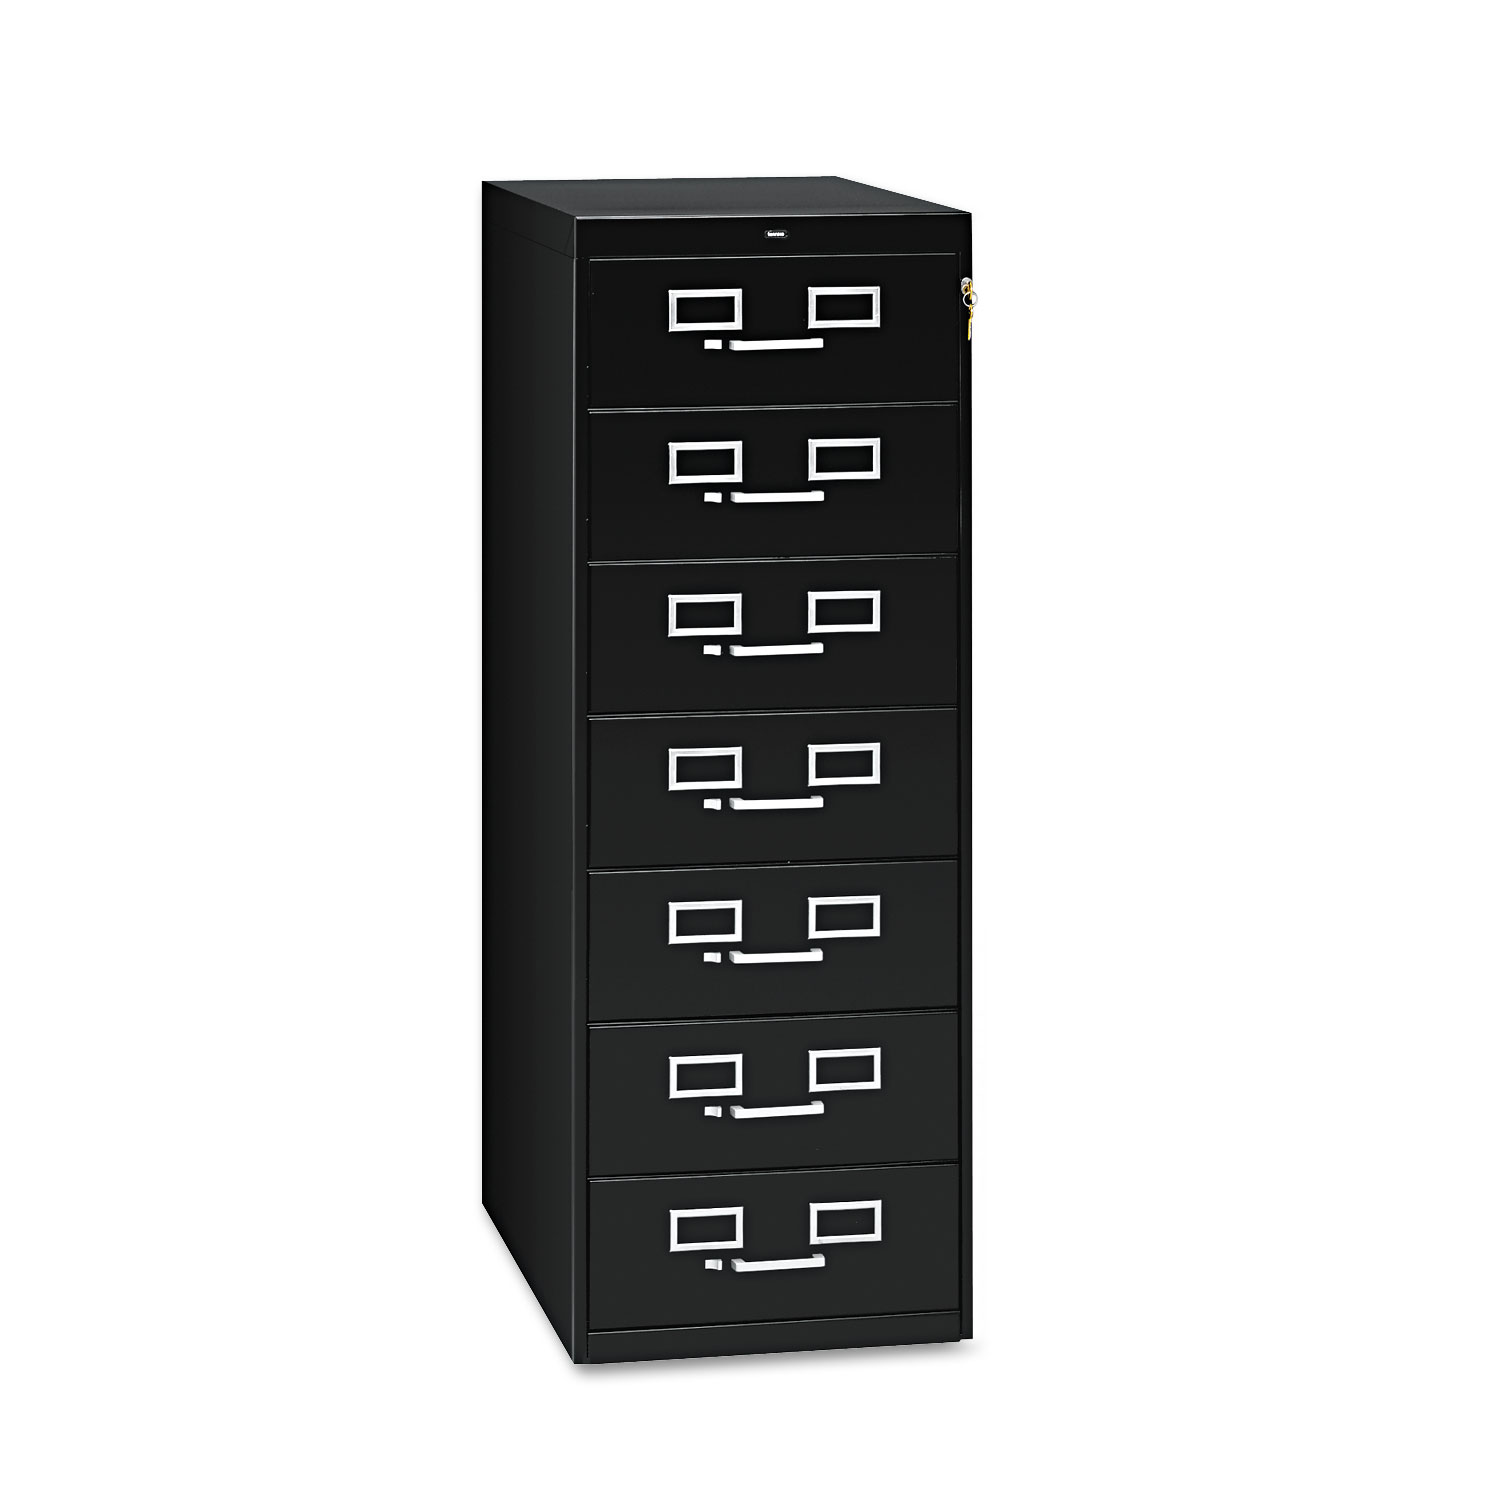  Tennsco CF-758BK Seven-Drawer Multimedia Cabinet for 5 x 8 Cards, 19.13w x 28.5d x 52h, Black (TNNCF758BK) 